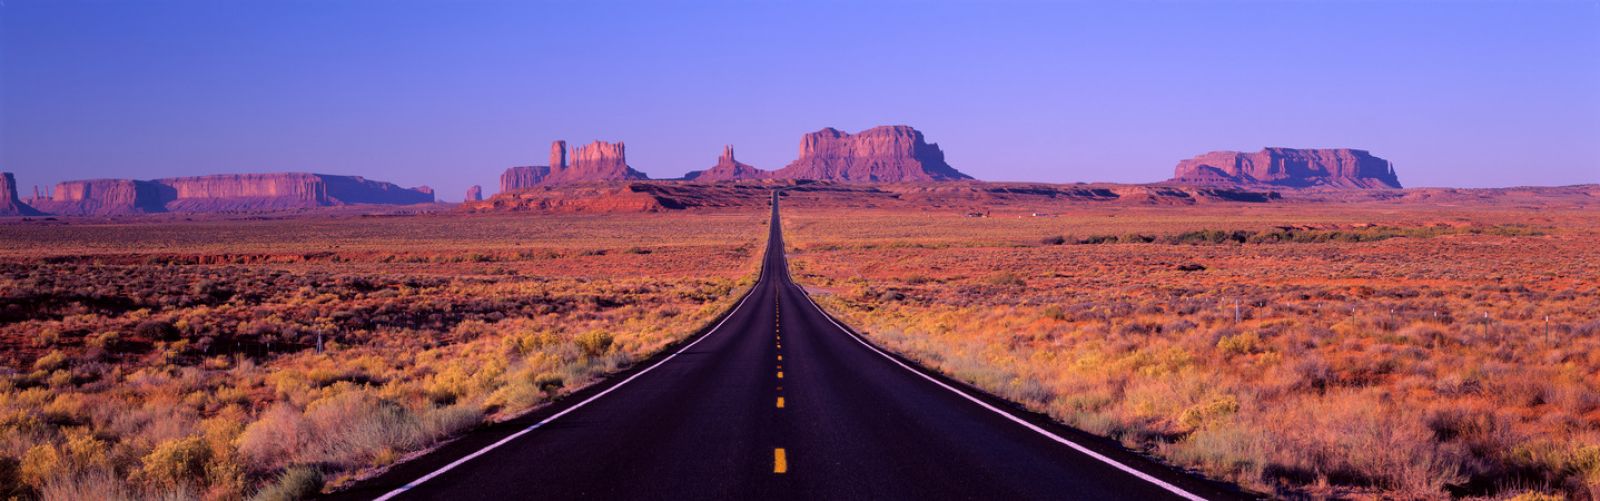 A long straight road through a desert banner image